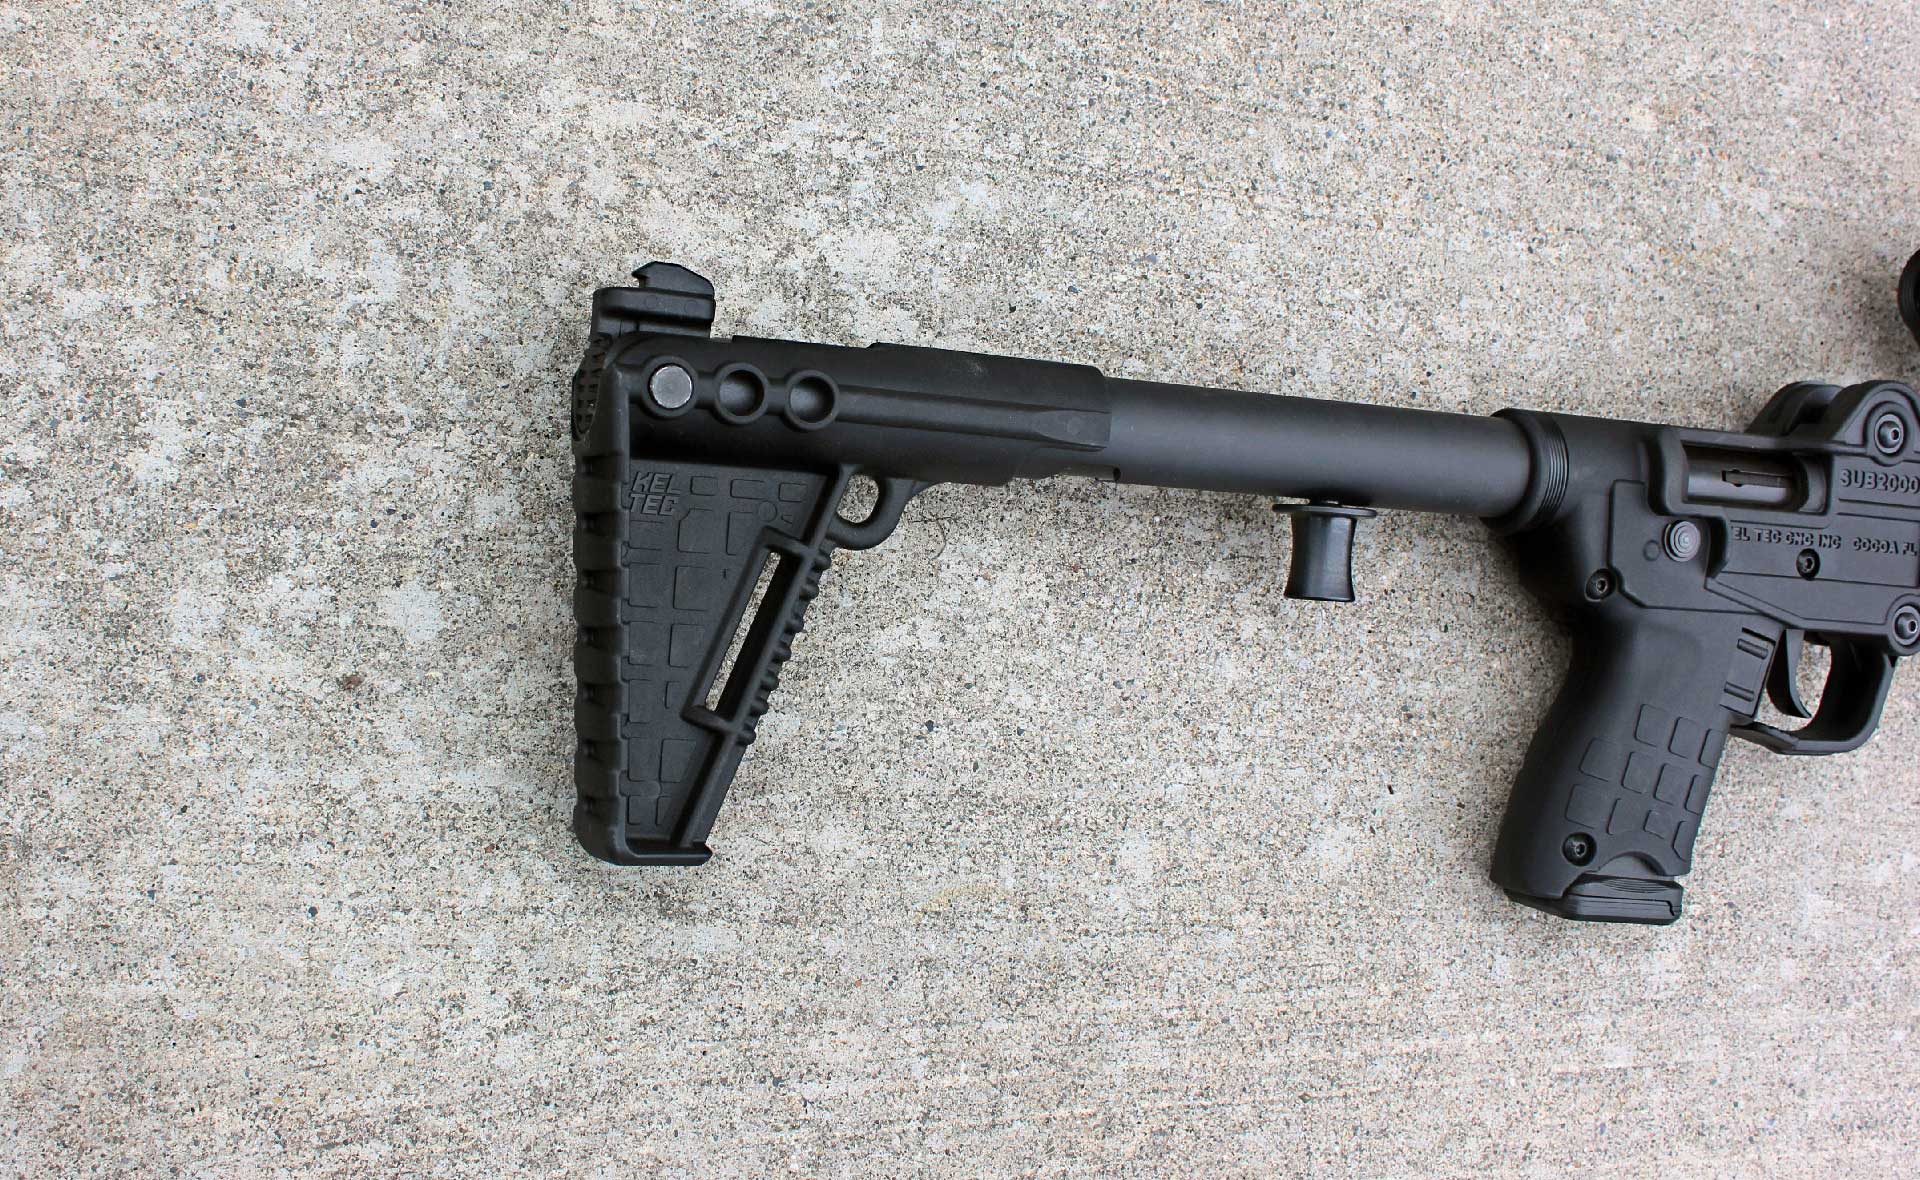 Polymer buttstock of the KelTec SUB2000 GEN3 carbine.